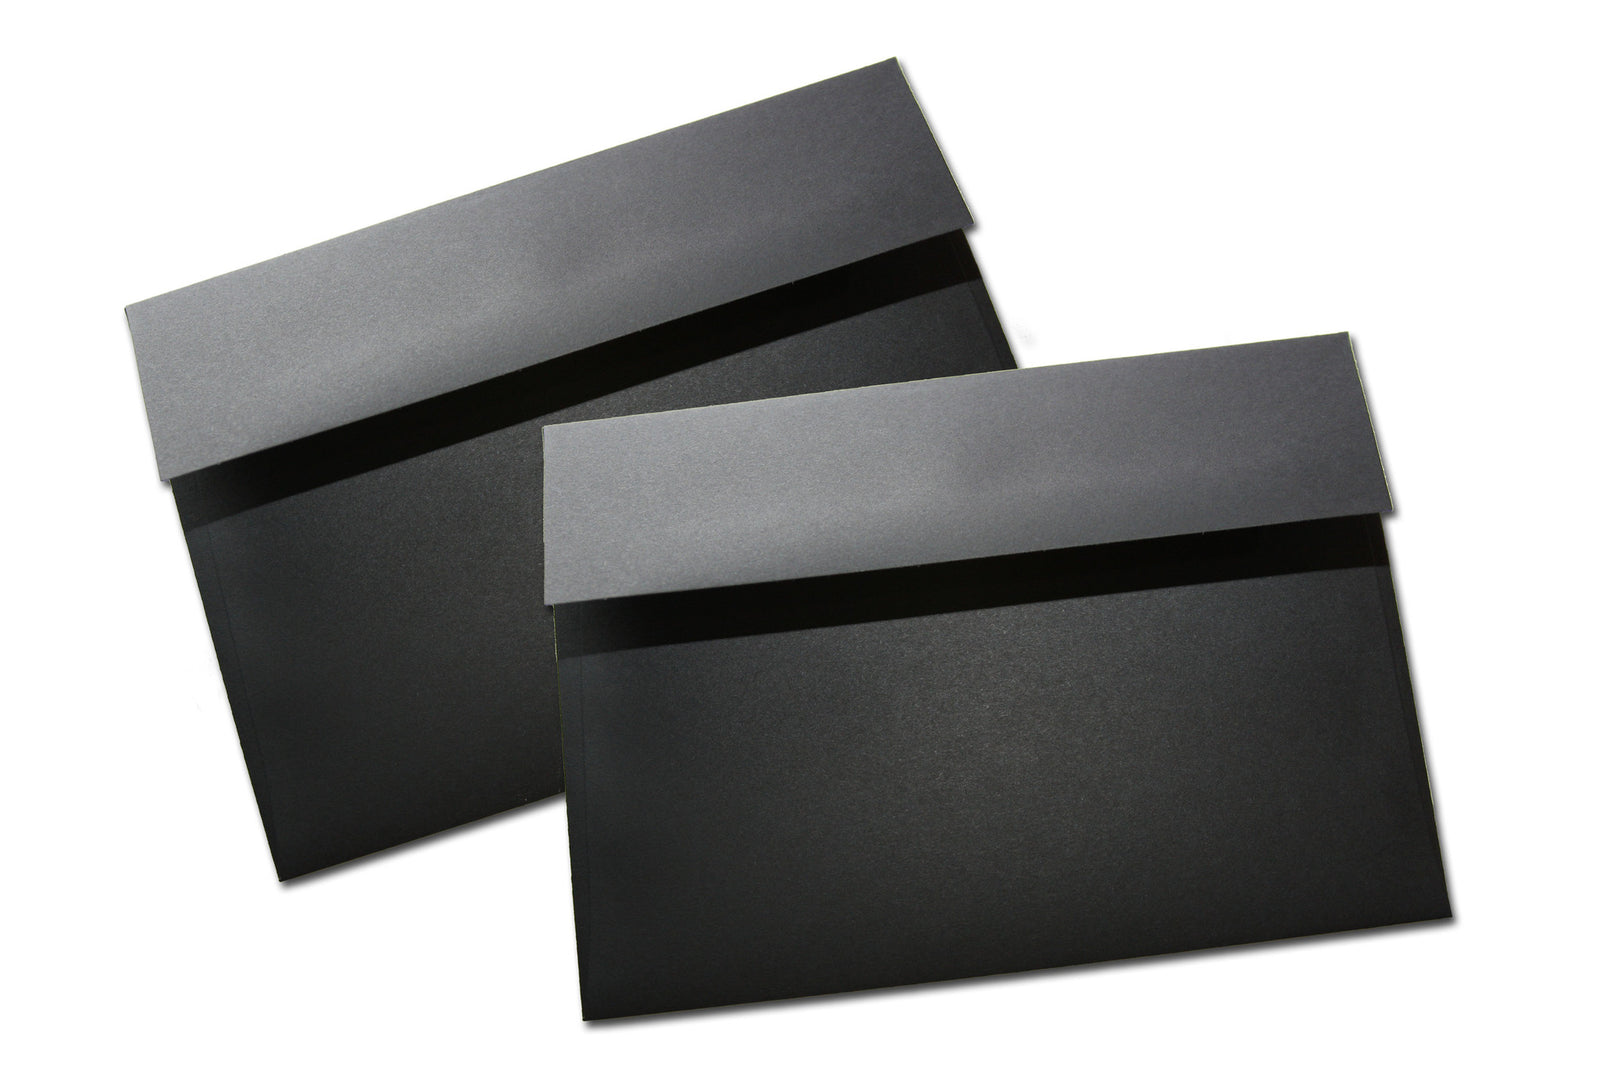 Jet Black Envelopes C6, 5x7 or C5 Ebony Invitation or RSVP Ebony